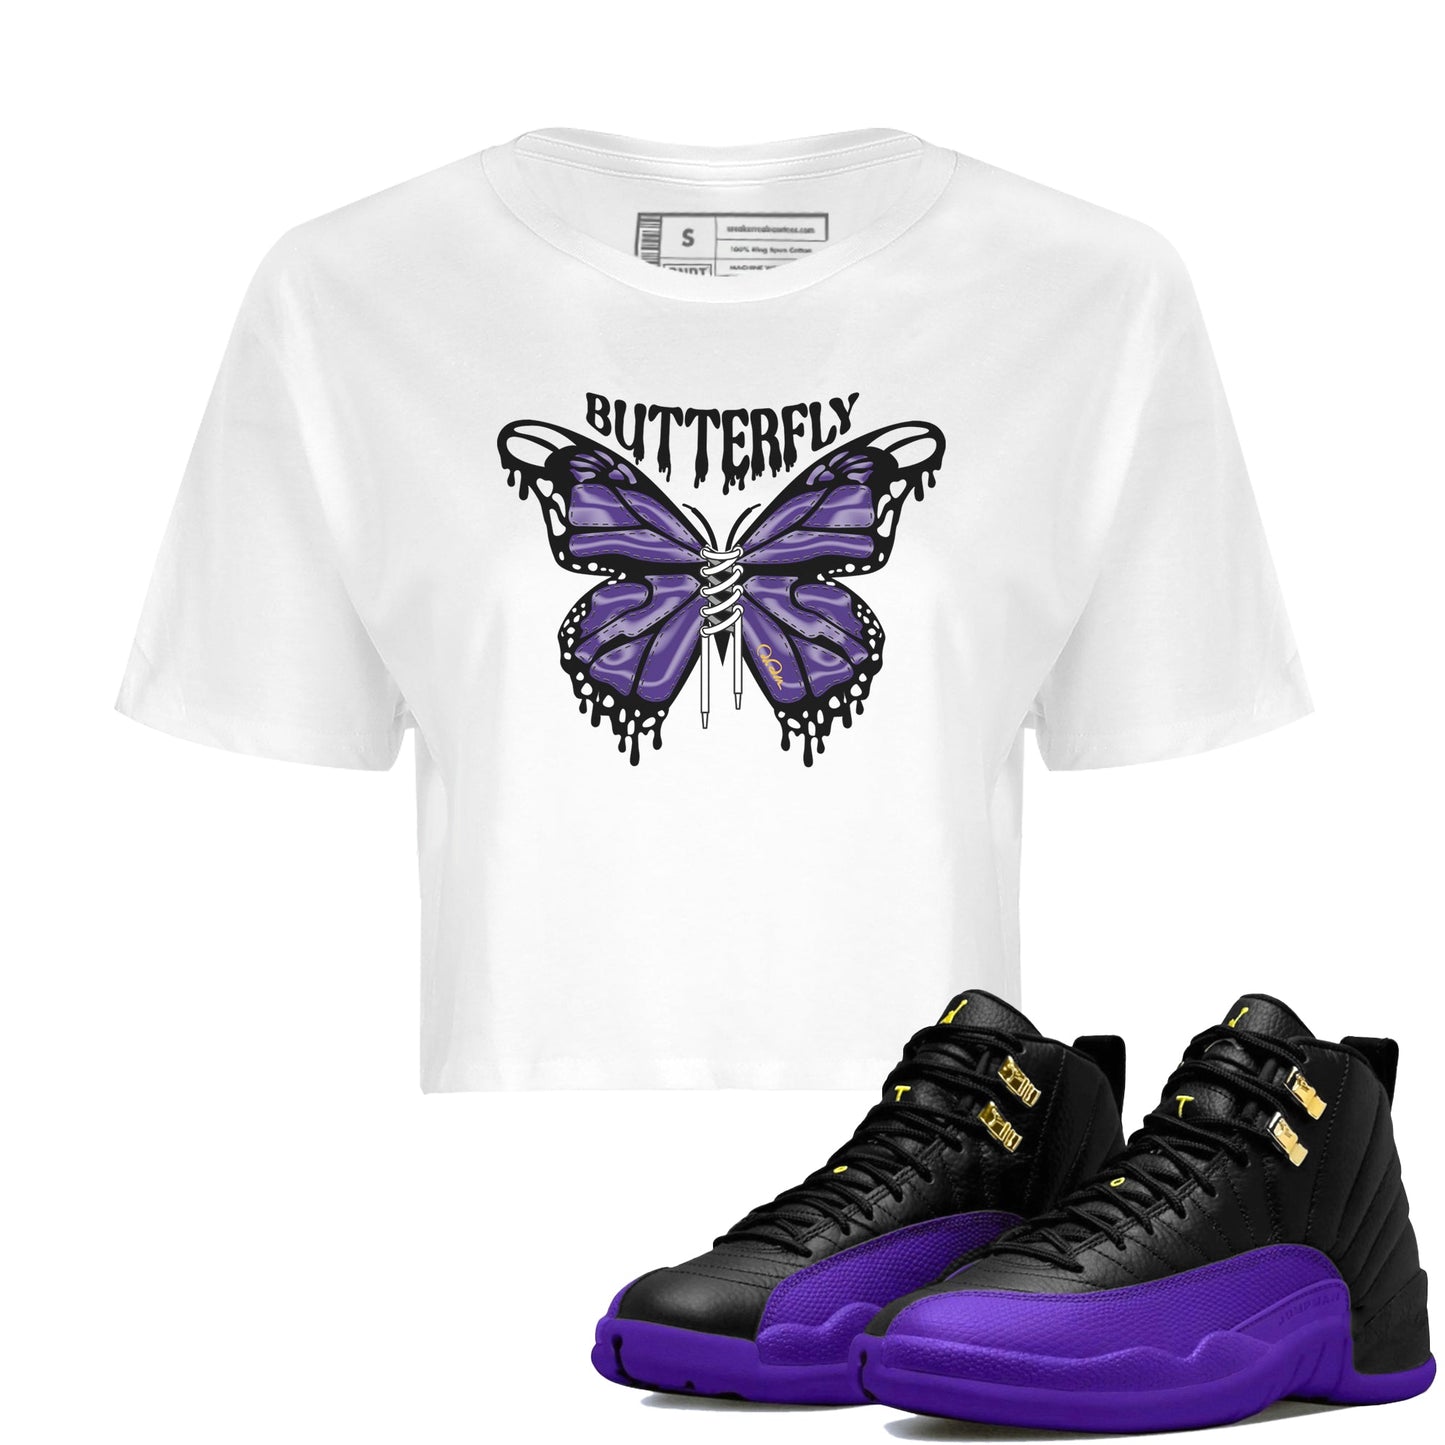 Air Jordan 12 Field Purple Sneaker Match Tees Butterfly Sneaker Tees AJ12 Field Purple Sneaker Release Tees Women's Shirts White 1